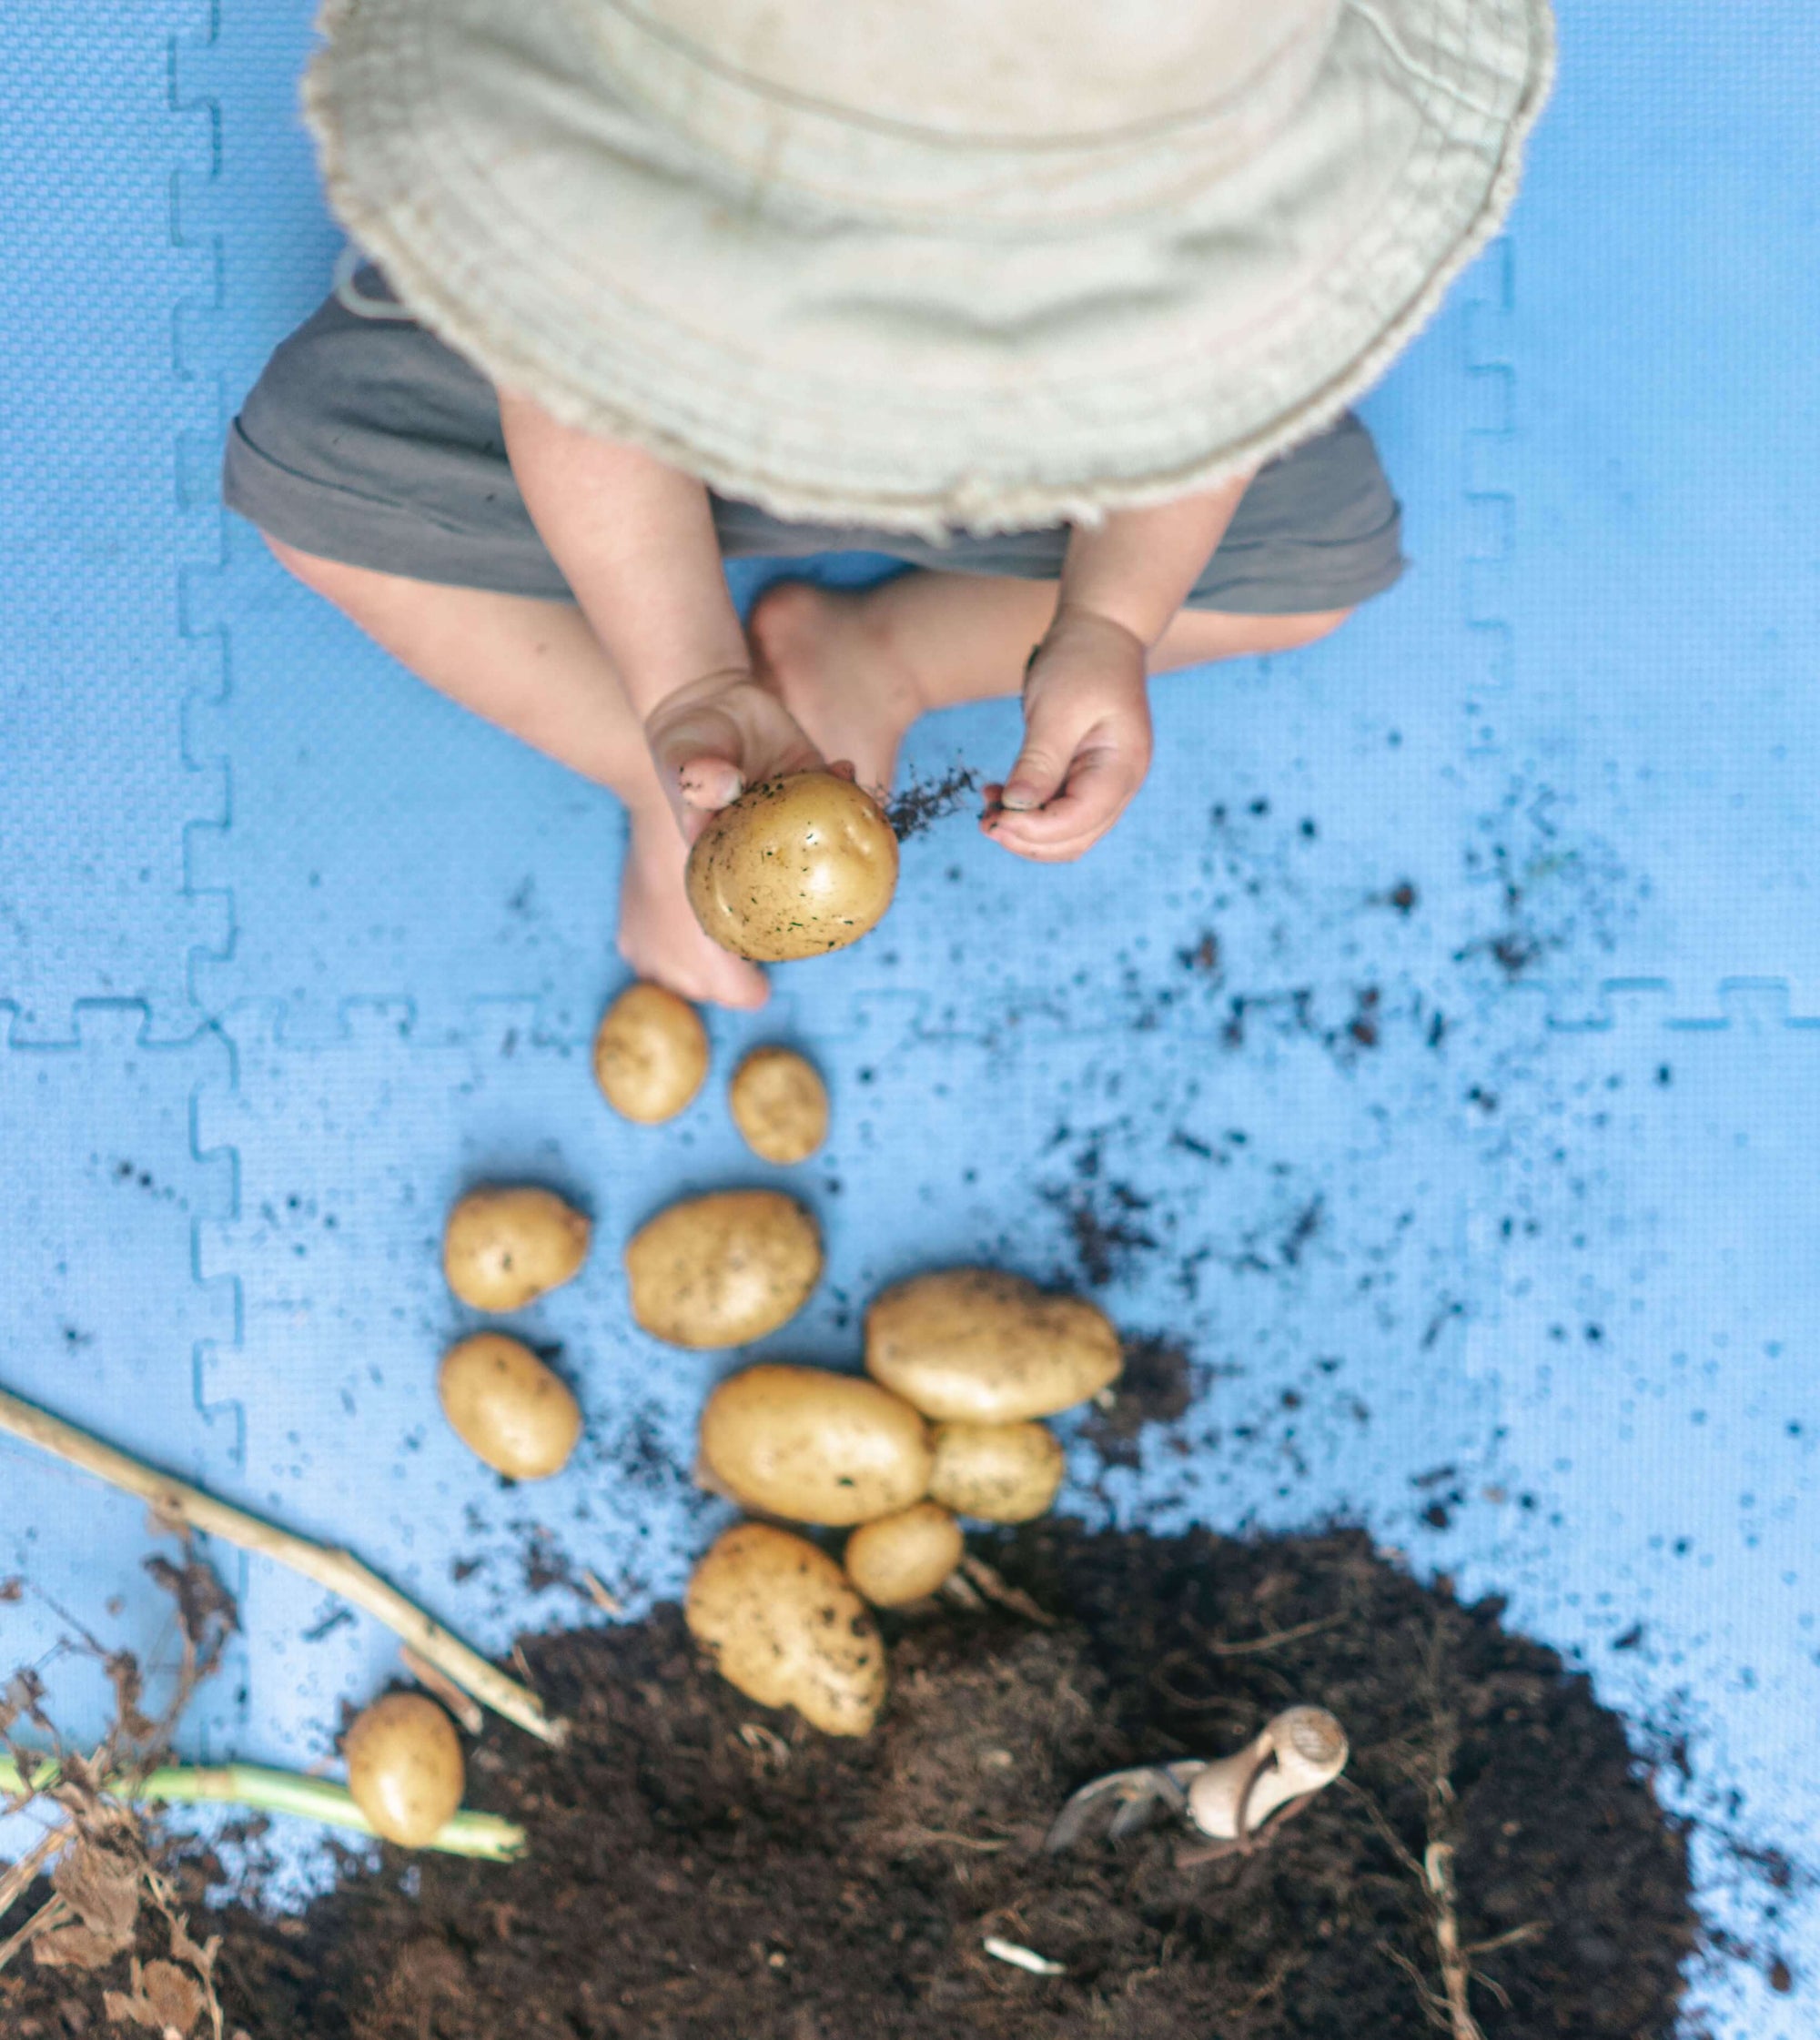 Grow Guide: Growing Potatoes in an Urban Space